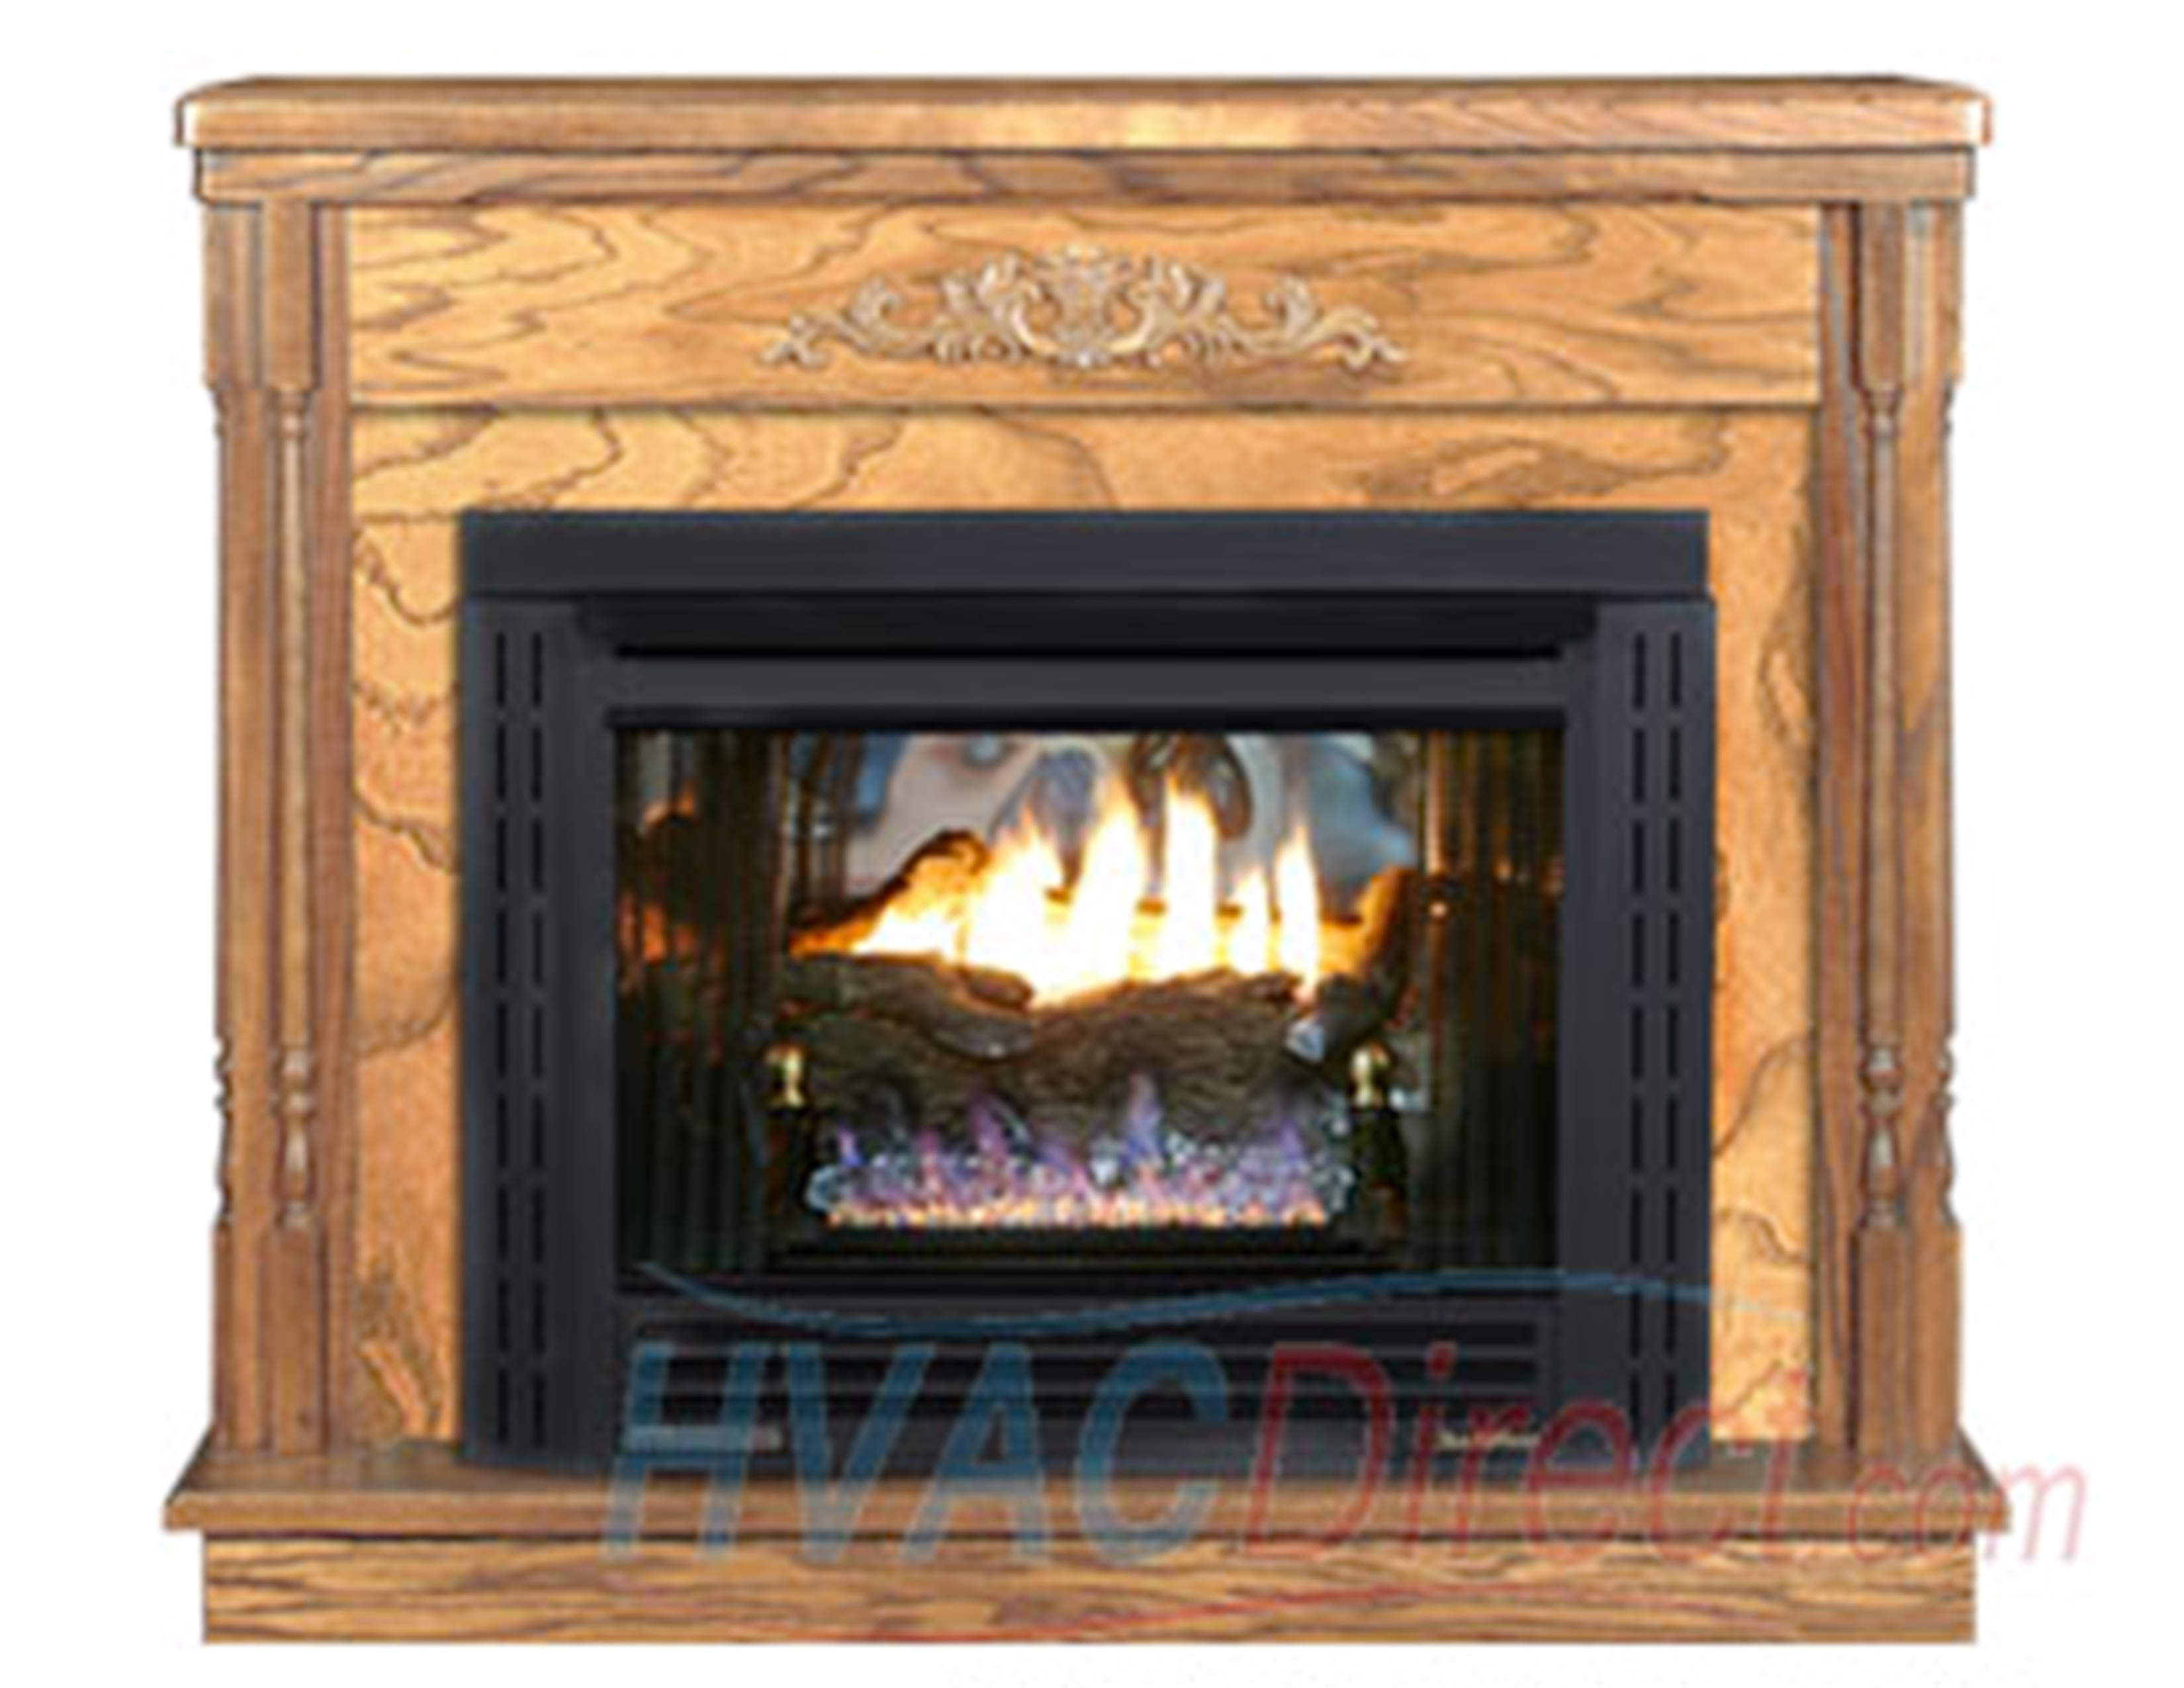 Wall Mount Propane Fireplace Elegant Buck Stove Model 34zc Vent Free Gas Fireplace